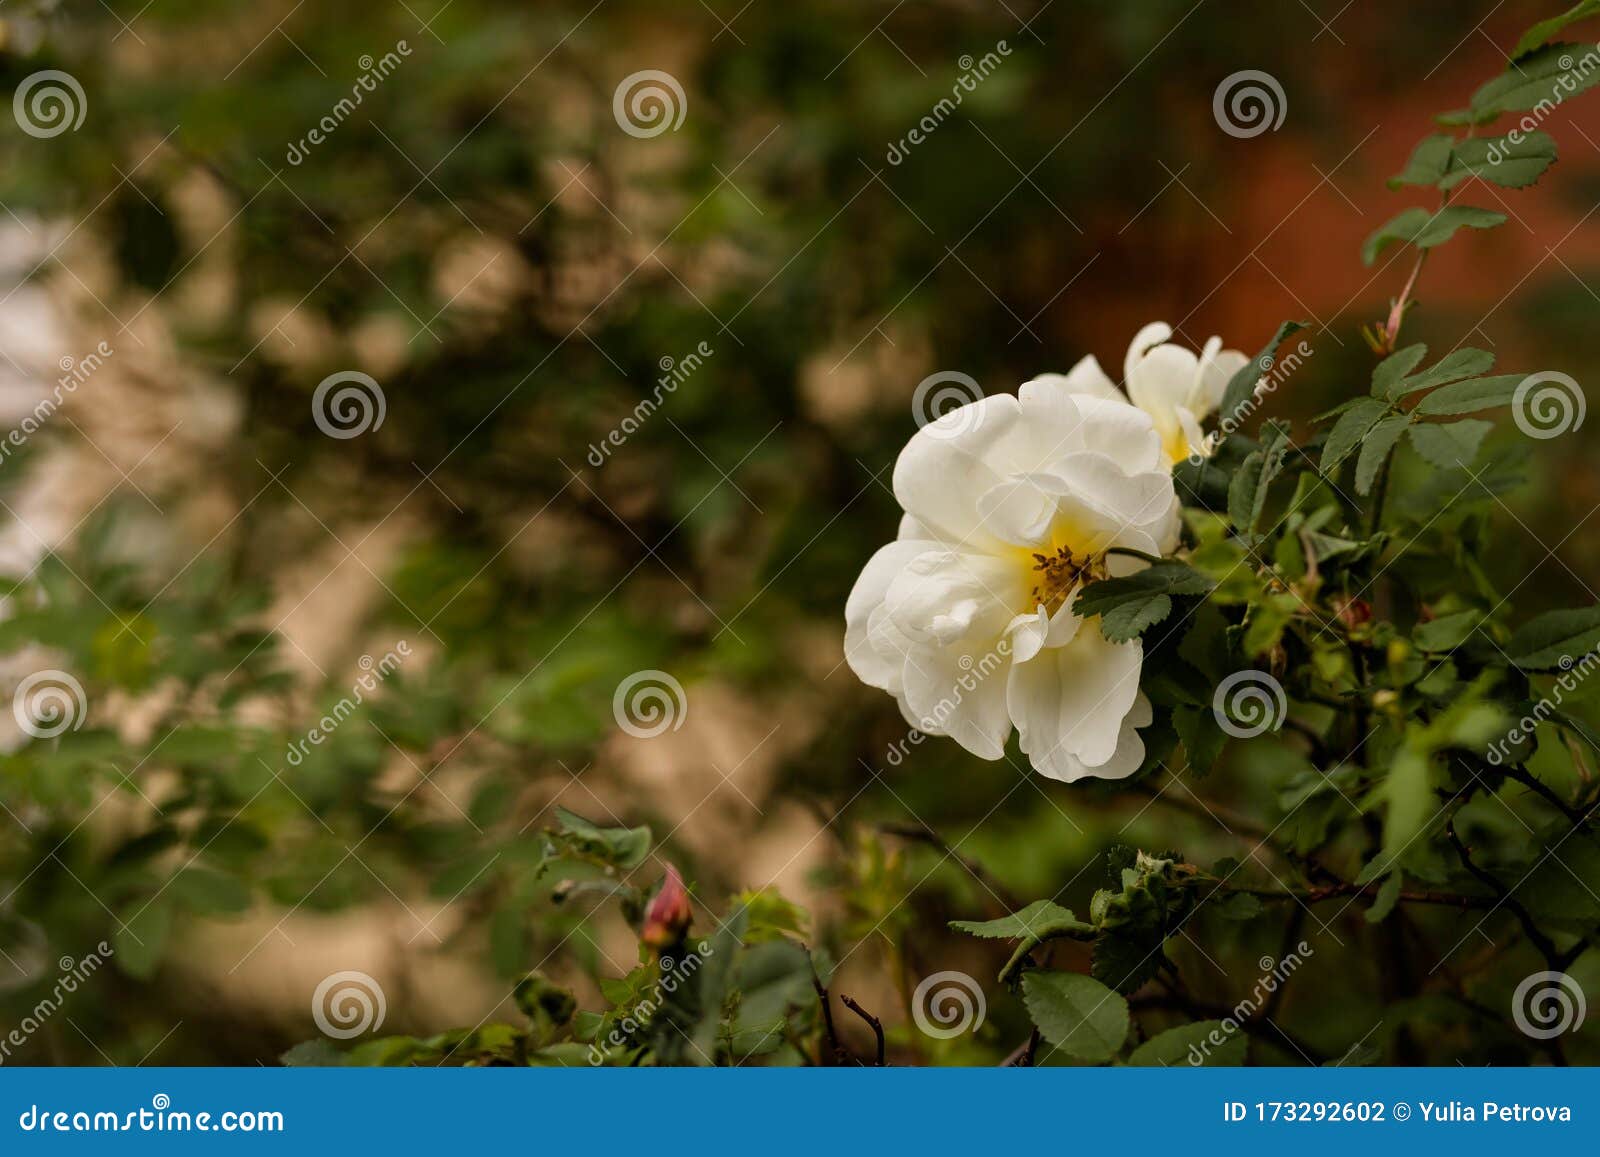 Rosa Pimpinellifolia, the Burnet Rose ,Scotch Rose, Which is